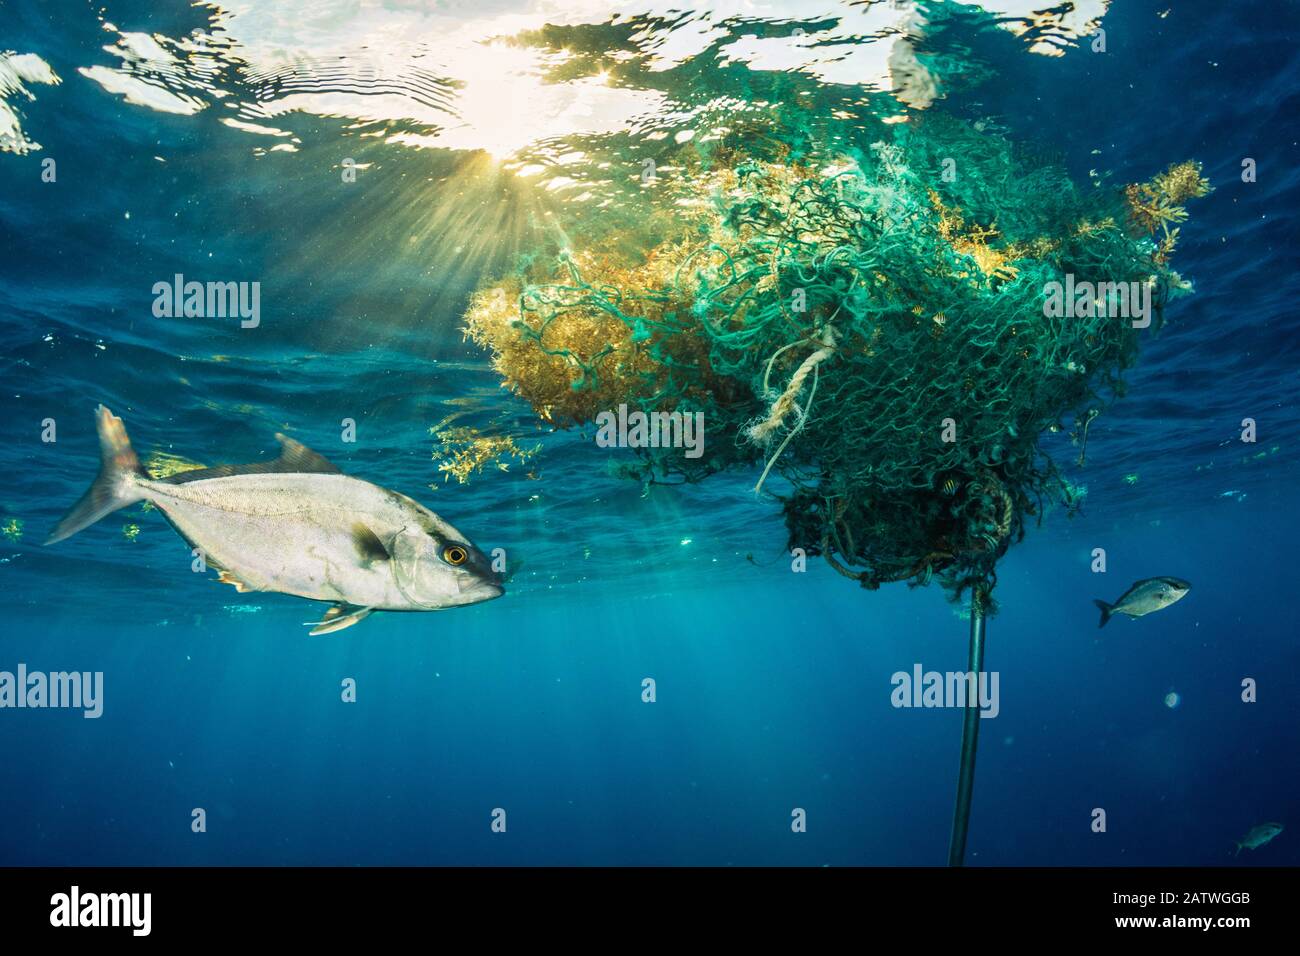 Almaco jack (Seriola rivoliana) uses a discarded fishing net, drifting in the open ocean as shelter. The Bahamas. Stock Photo